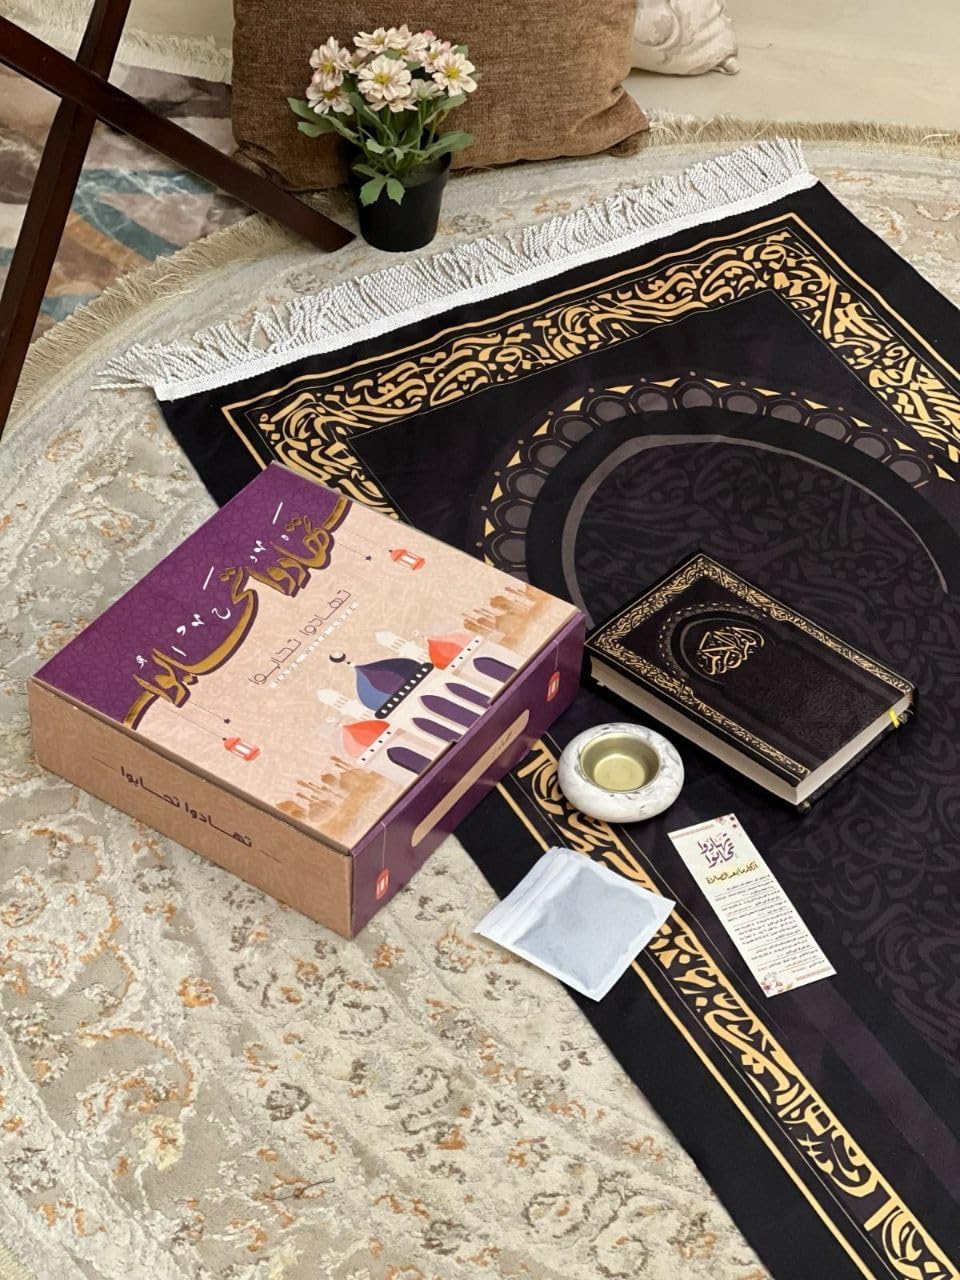 Ramadan box (velvet rug + Quran + marble incense burner + dhikr card “Quran break” + incense) Calm down and love the cleanest material (black color)